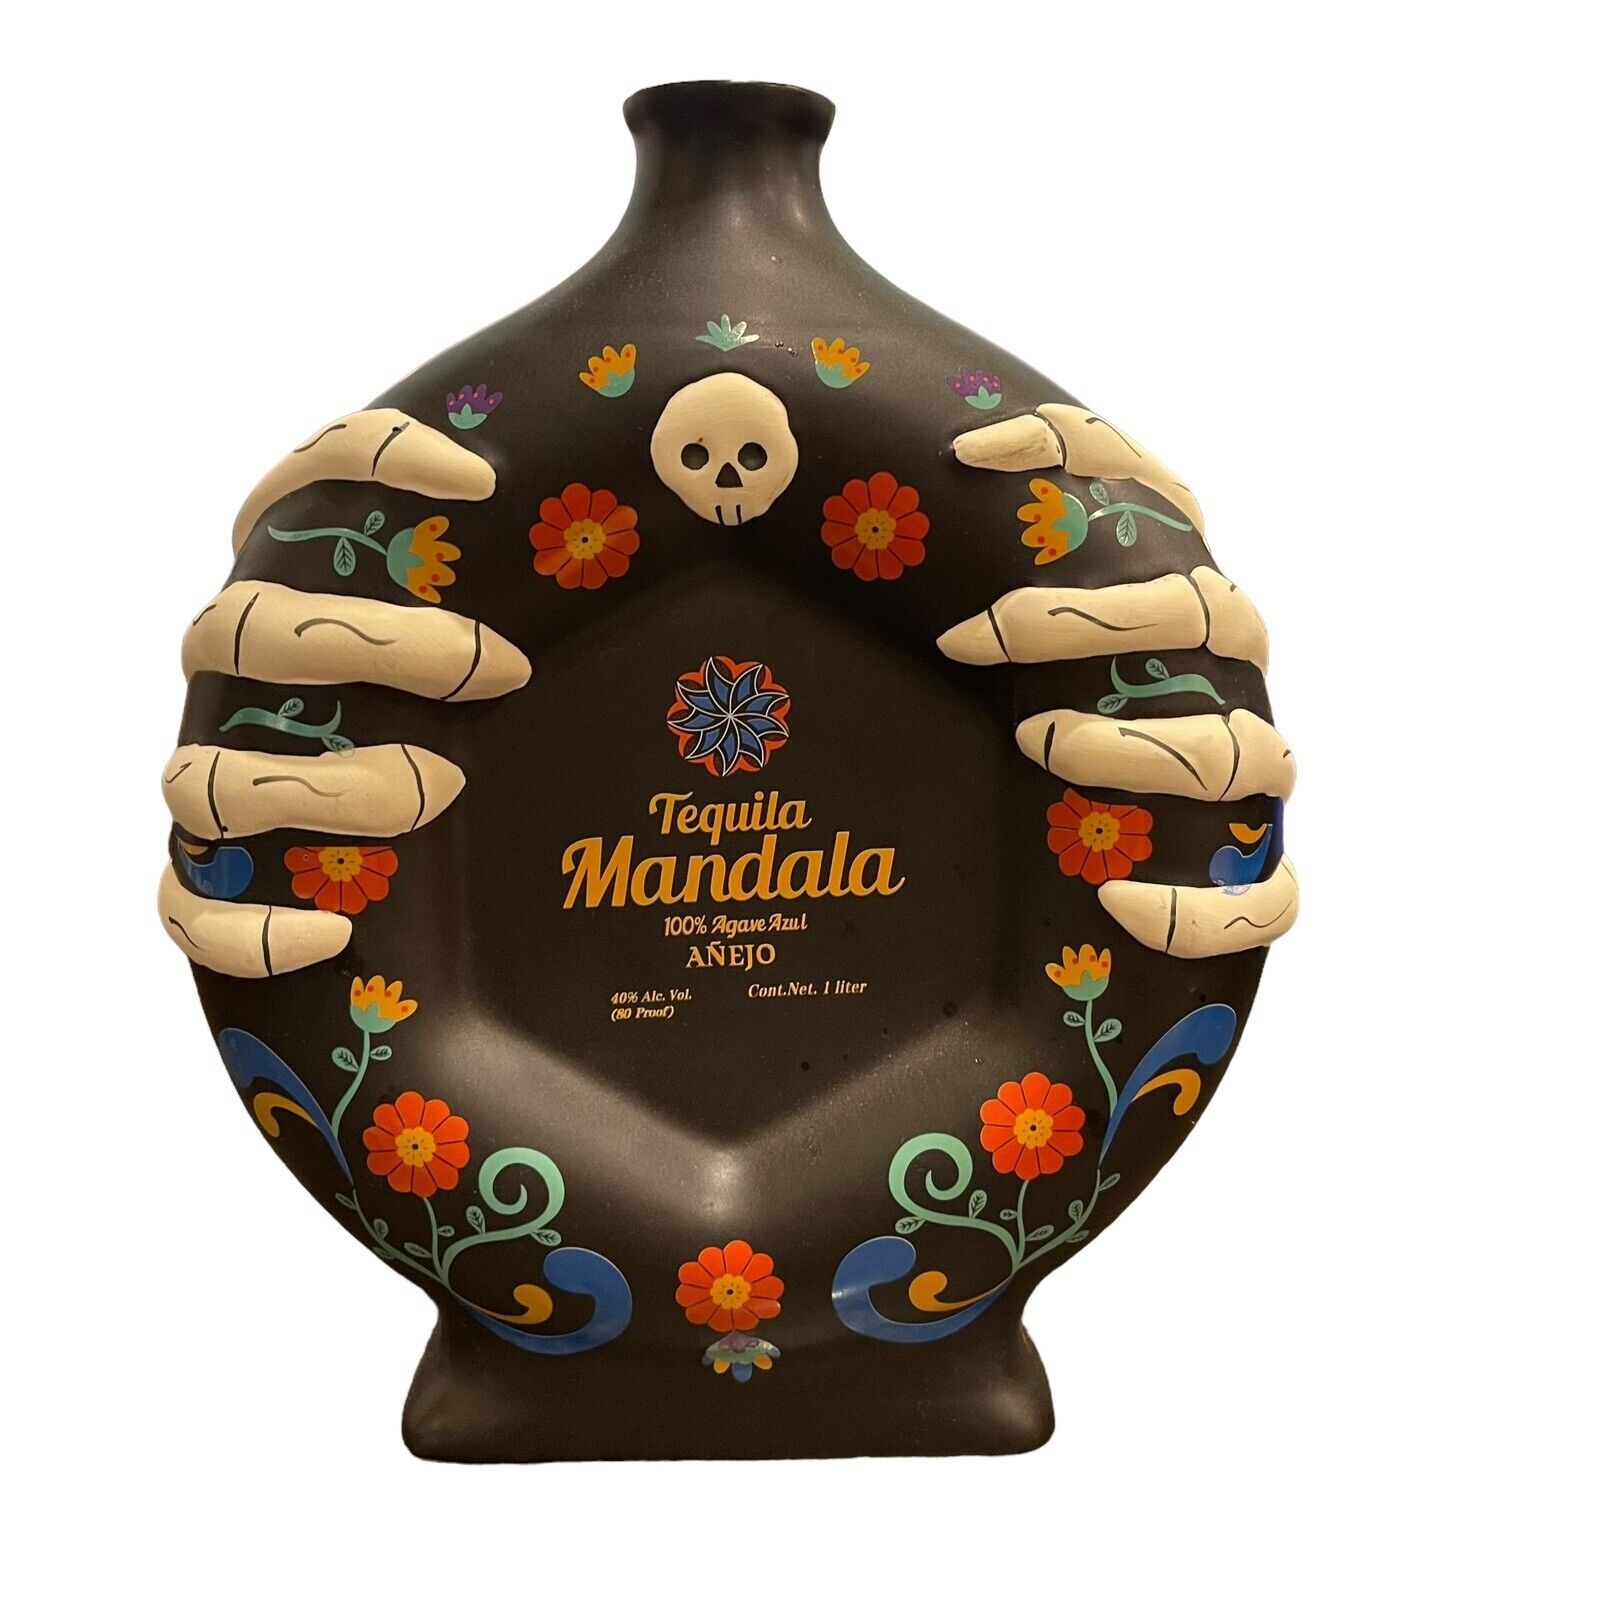 Mandala Tequila Dia De Los Muertos Limited Edition Skull & Bones Empty Bottle